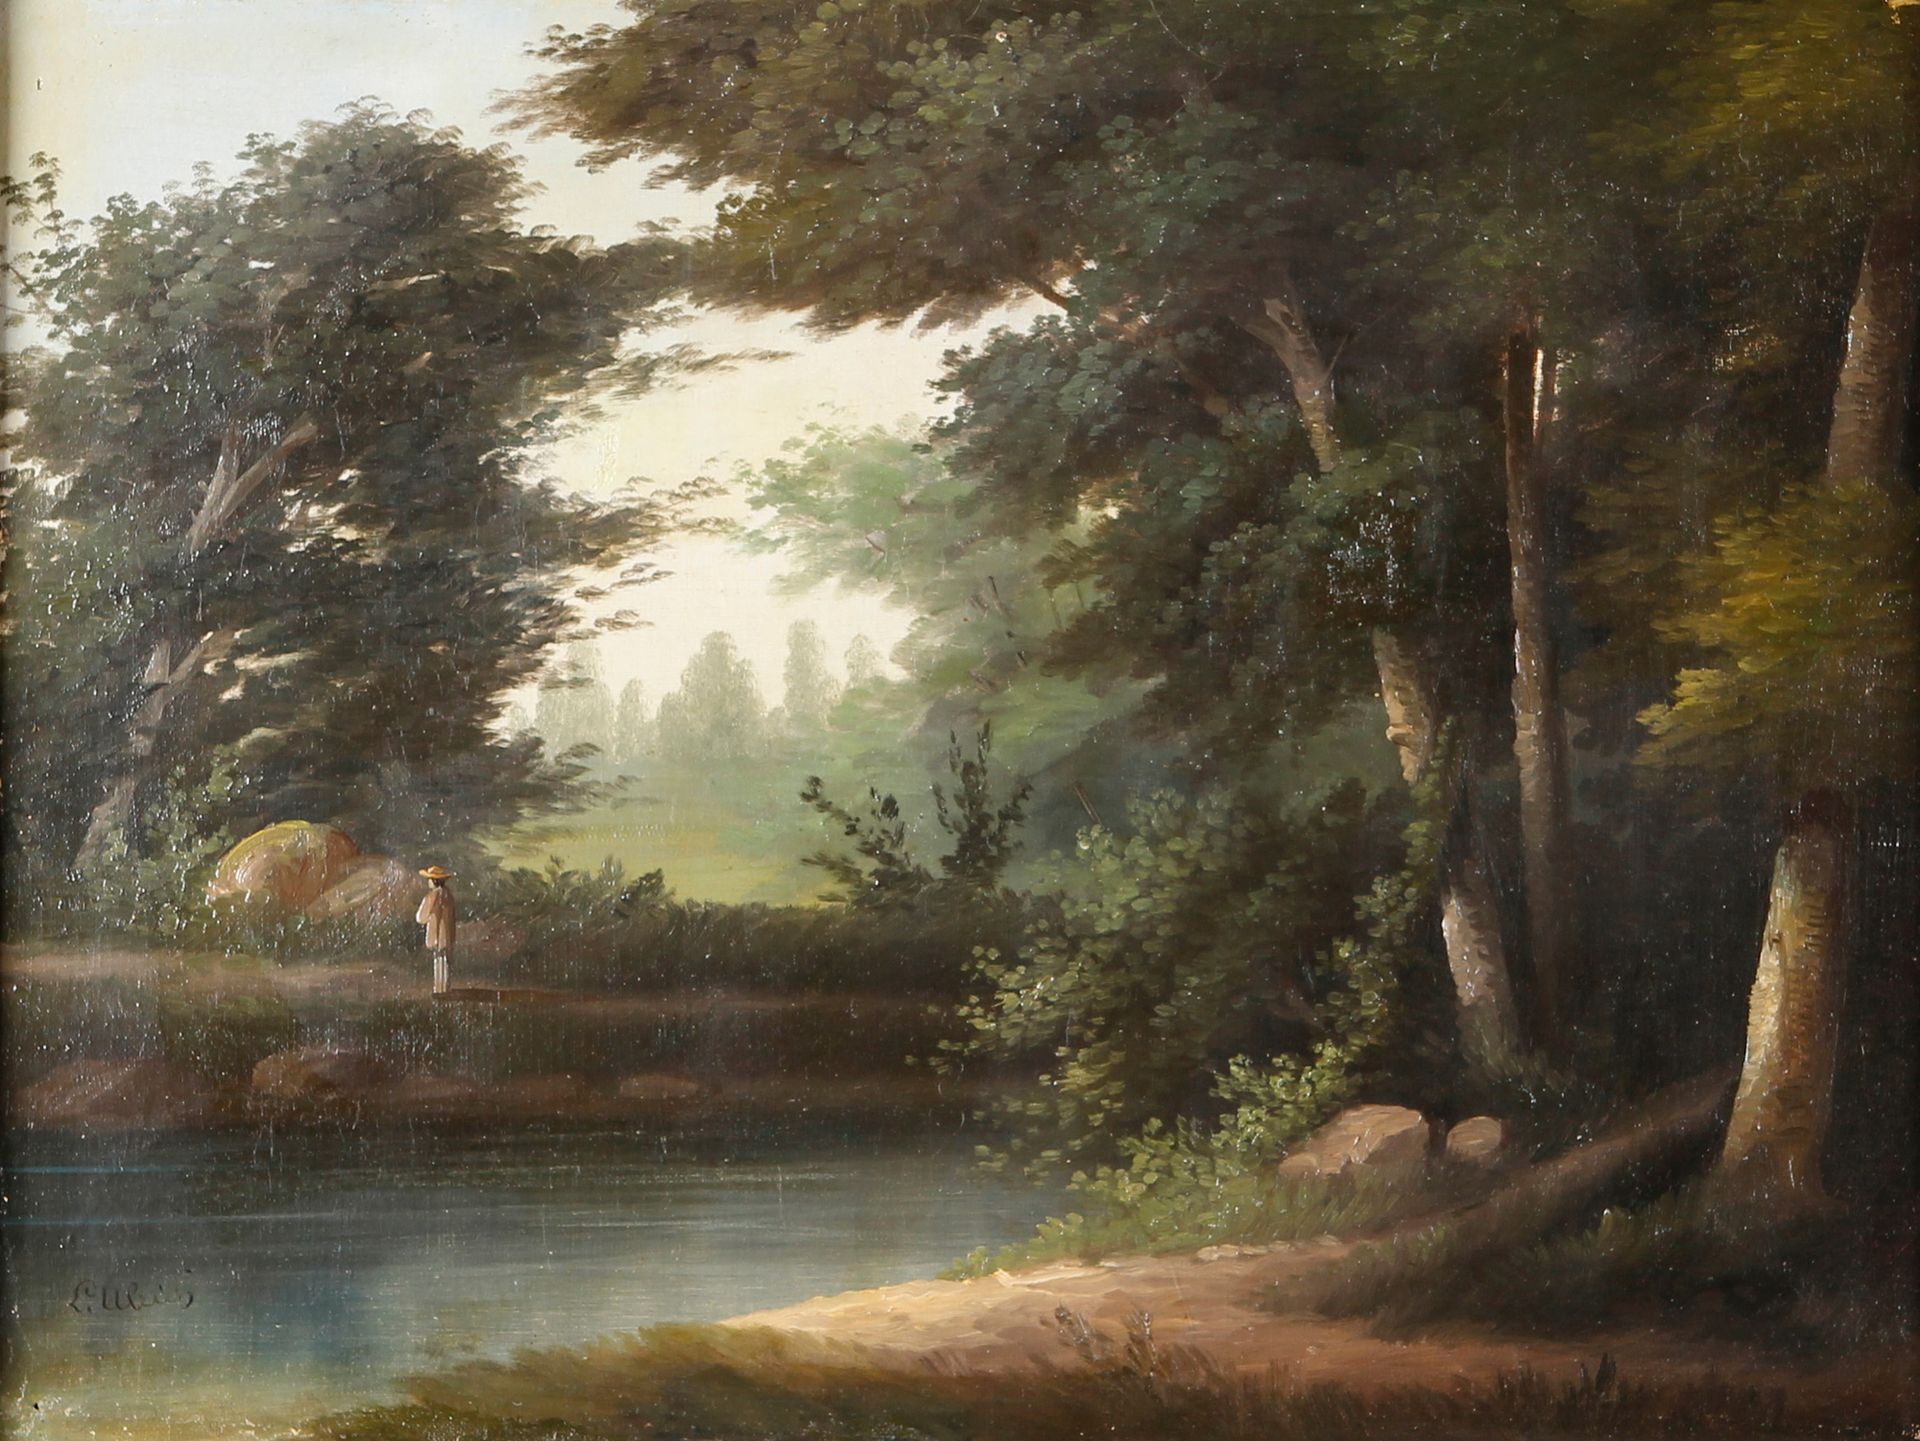 Null L.ULRICH (19世纪晚期)

池塘边的梦想家

布面油画，左下方有签名。

木质框架和镀金灰泥，装饰有刺桐叶。

(小事故，两次修复）。

4&hellip;